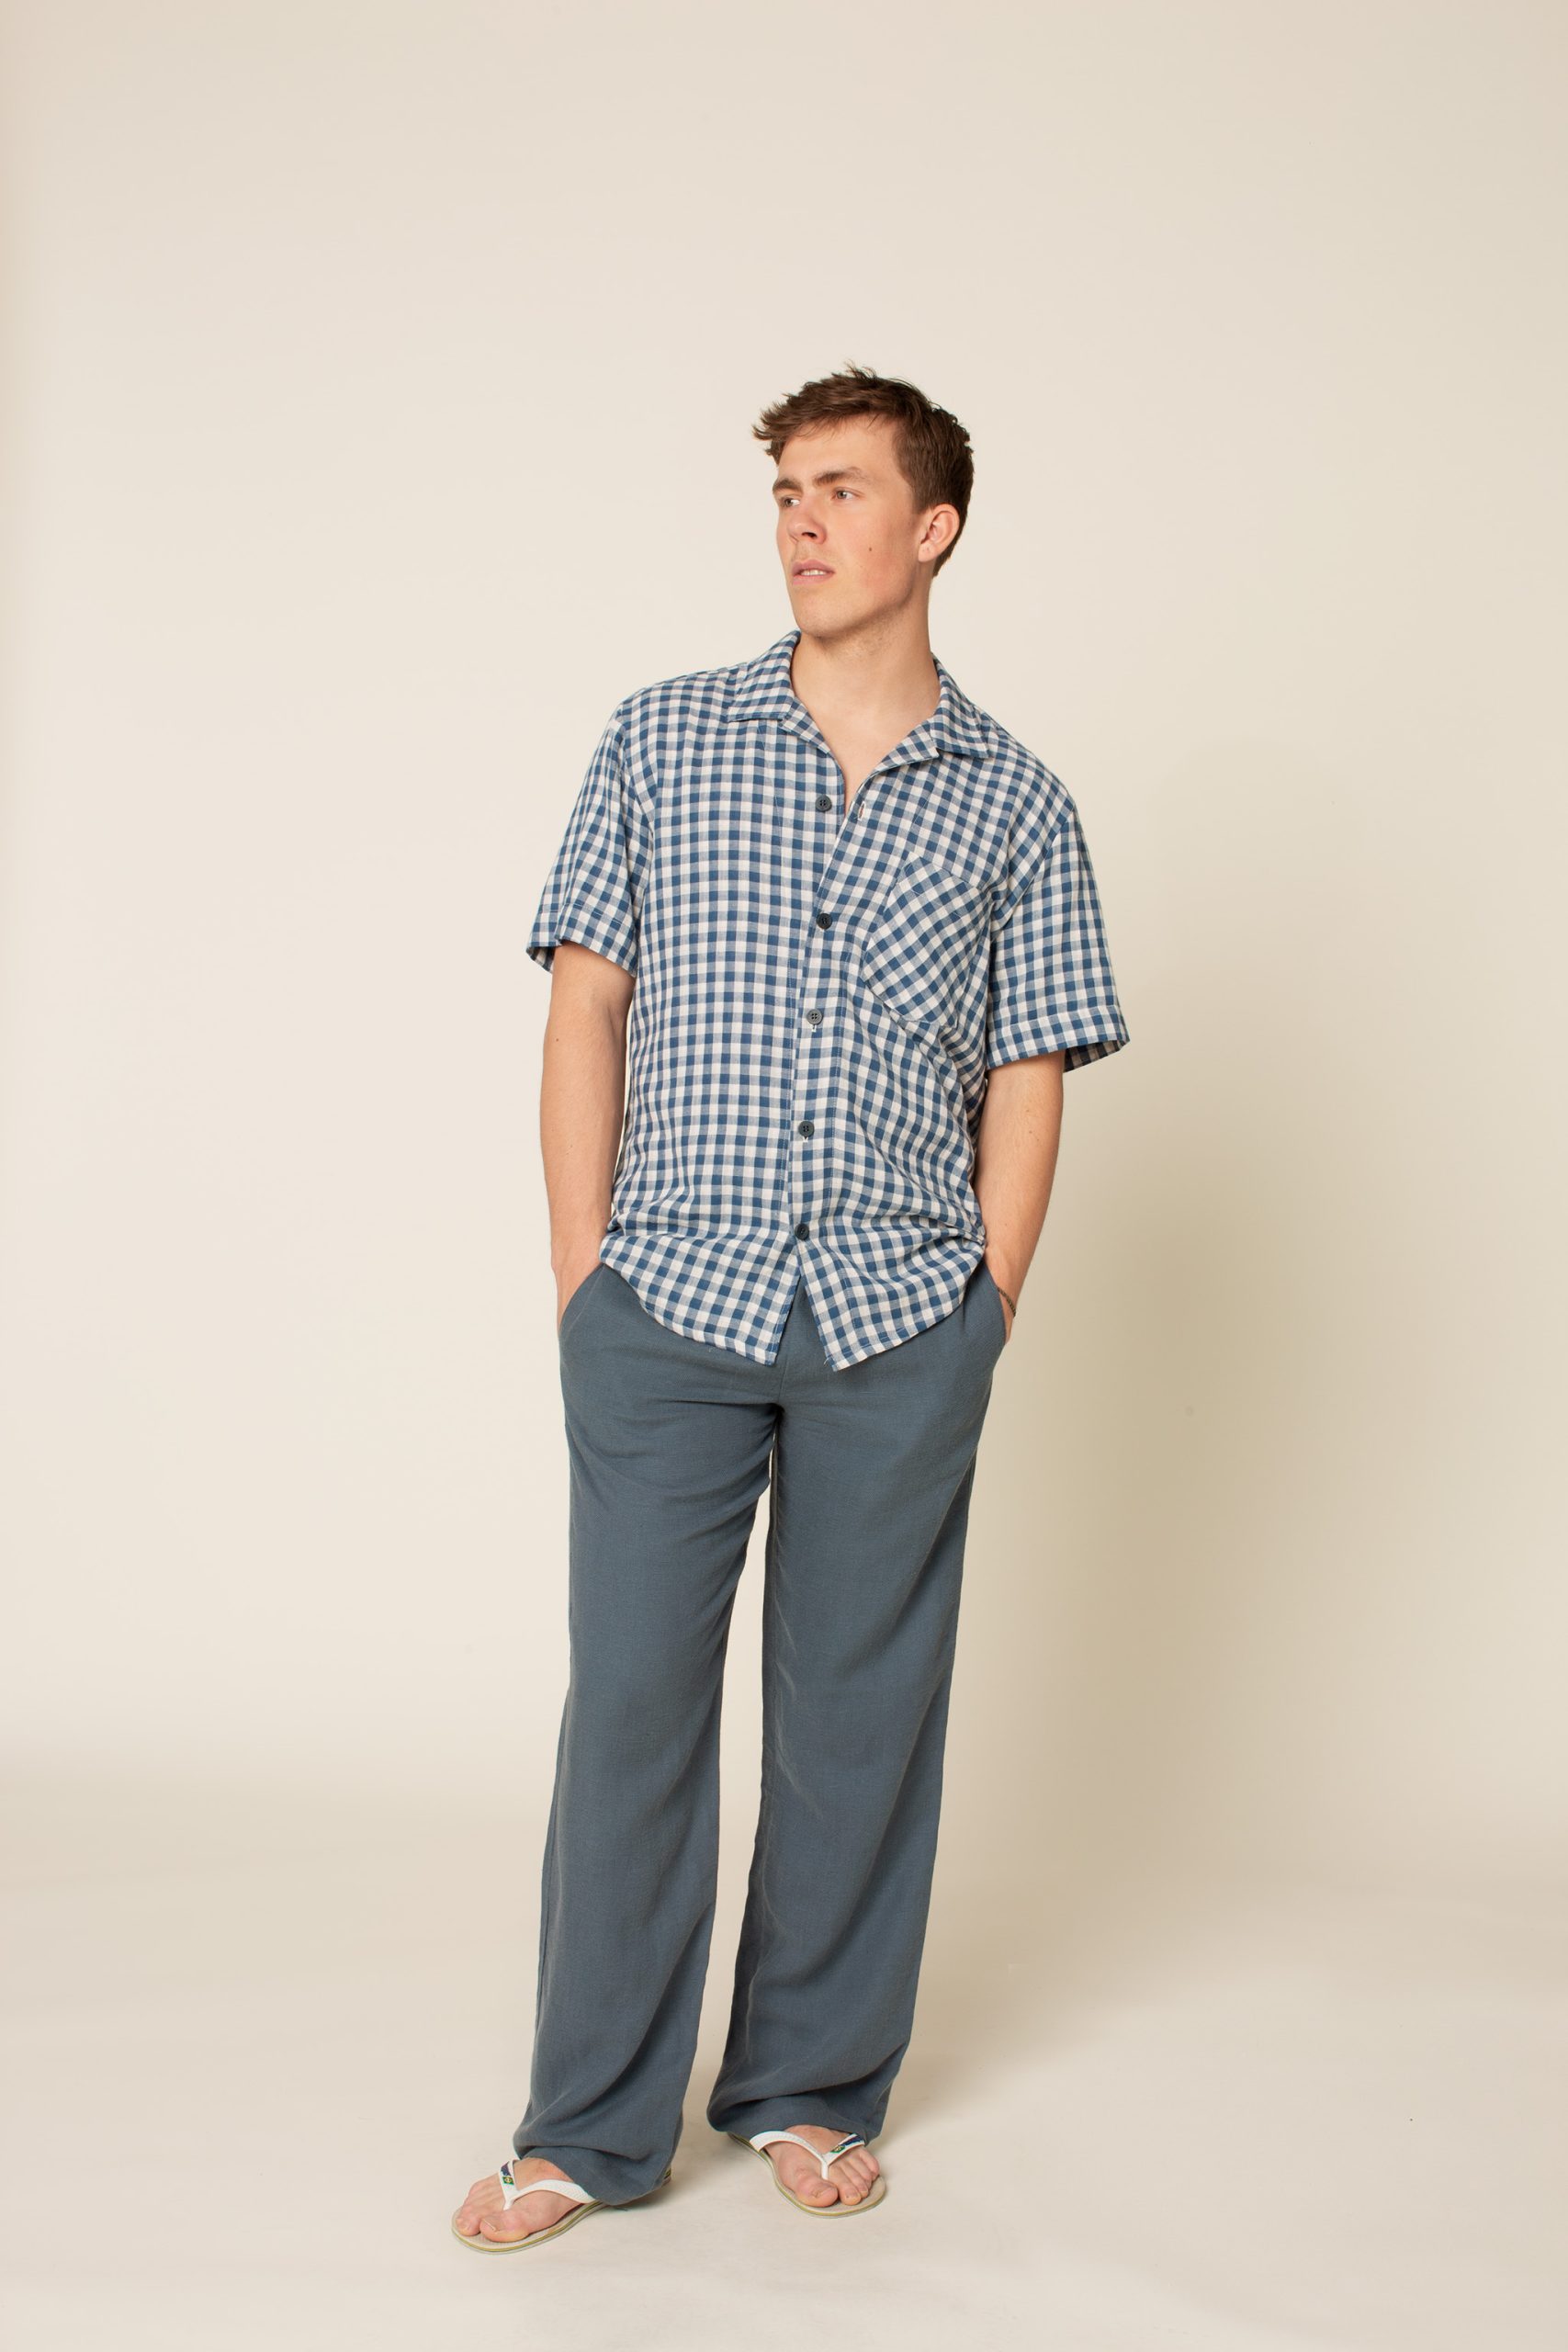 Wardrobe by Me Men's Loose Linen Pants - The Fold Line